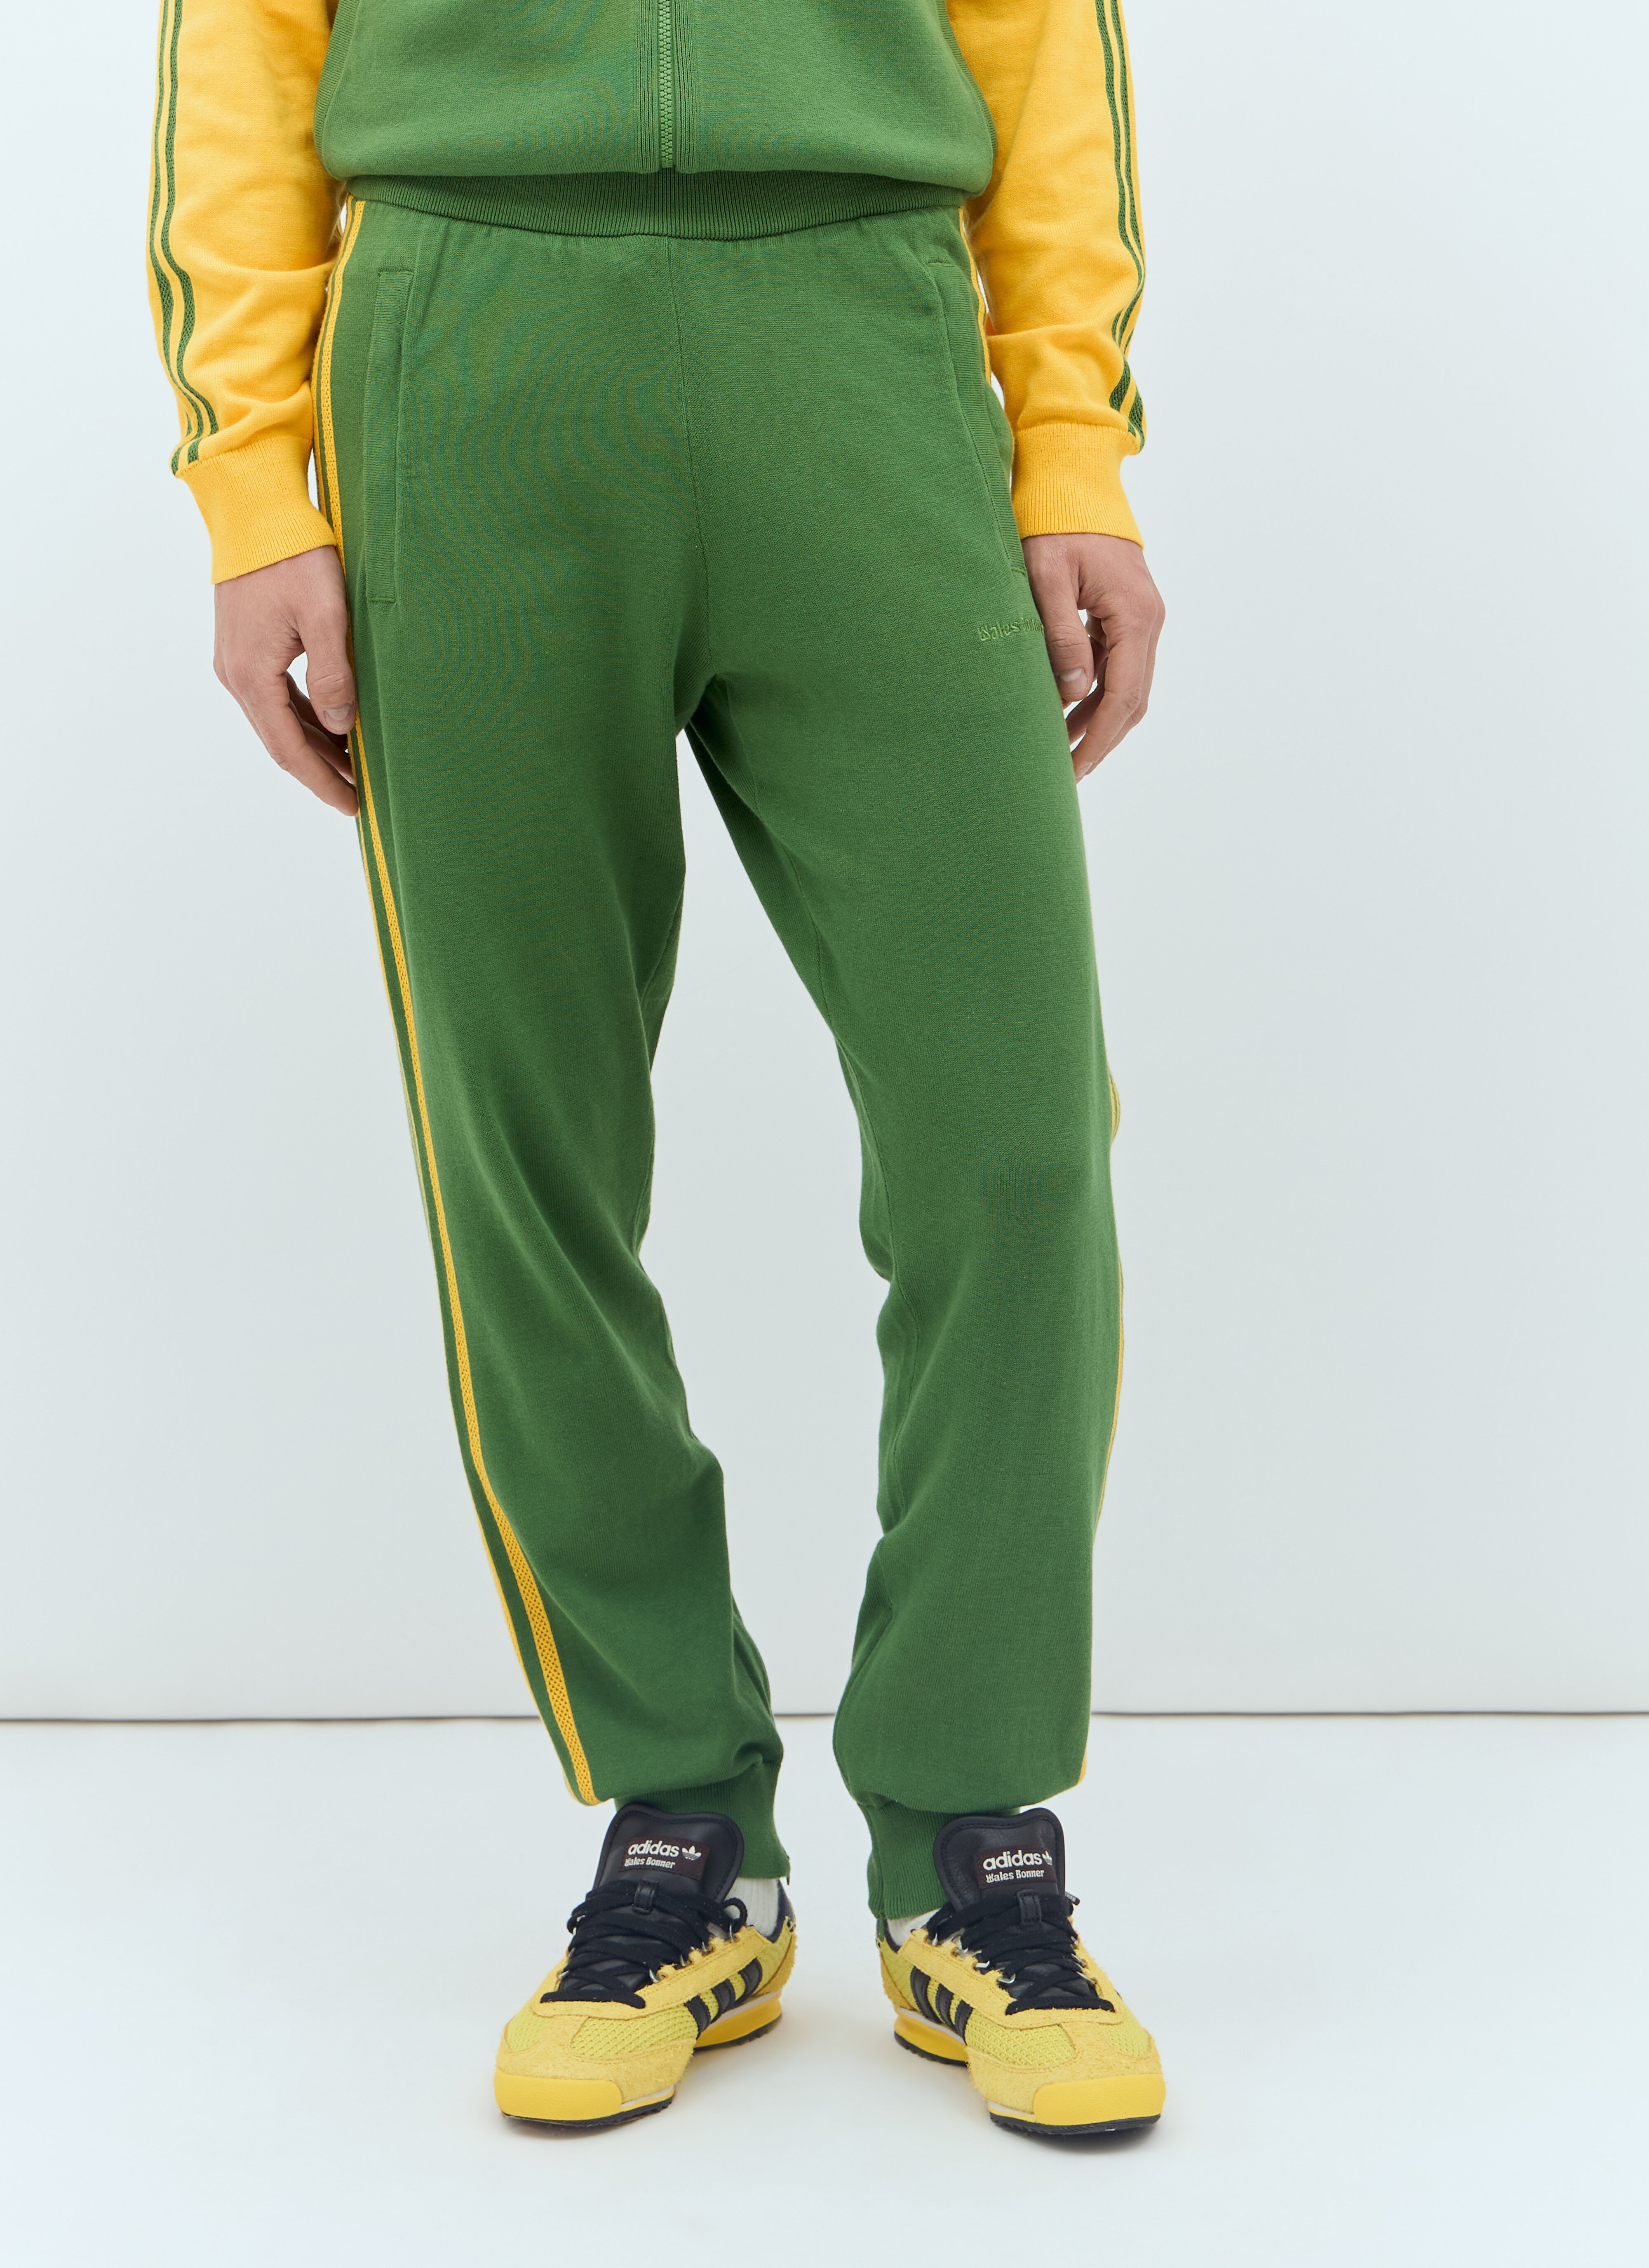 adidas by Craig Green Knit Track Pants Cream adg0153003